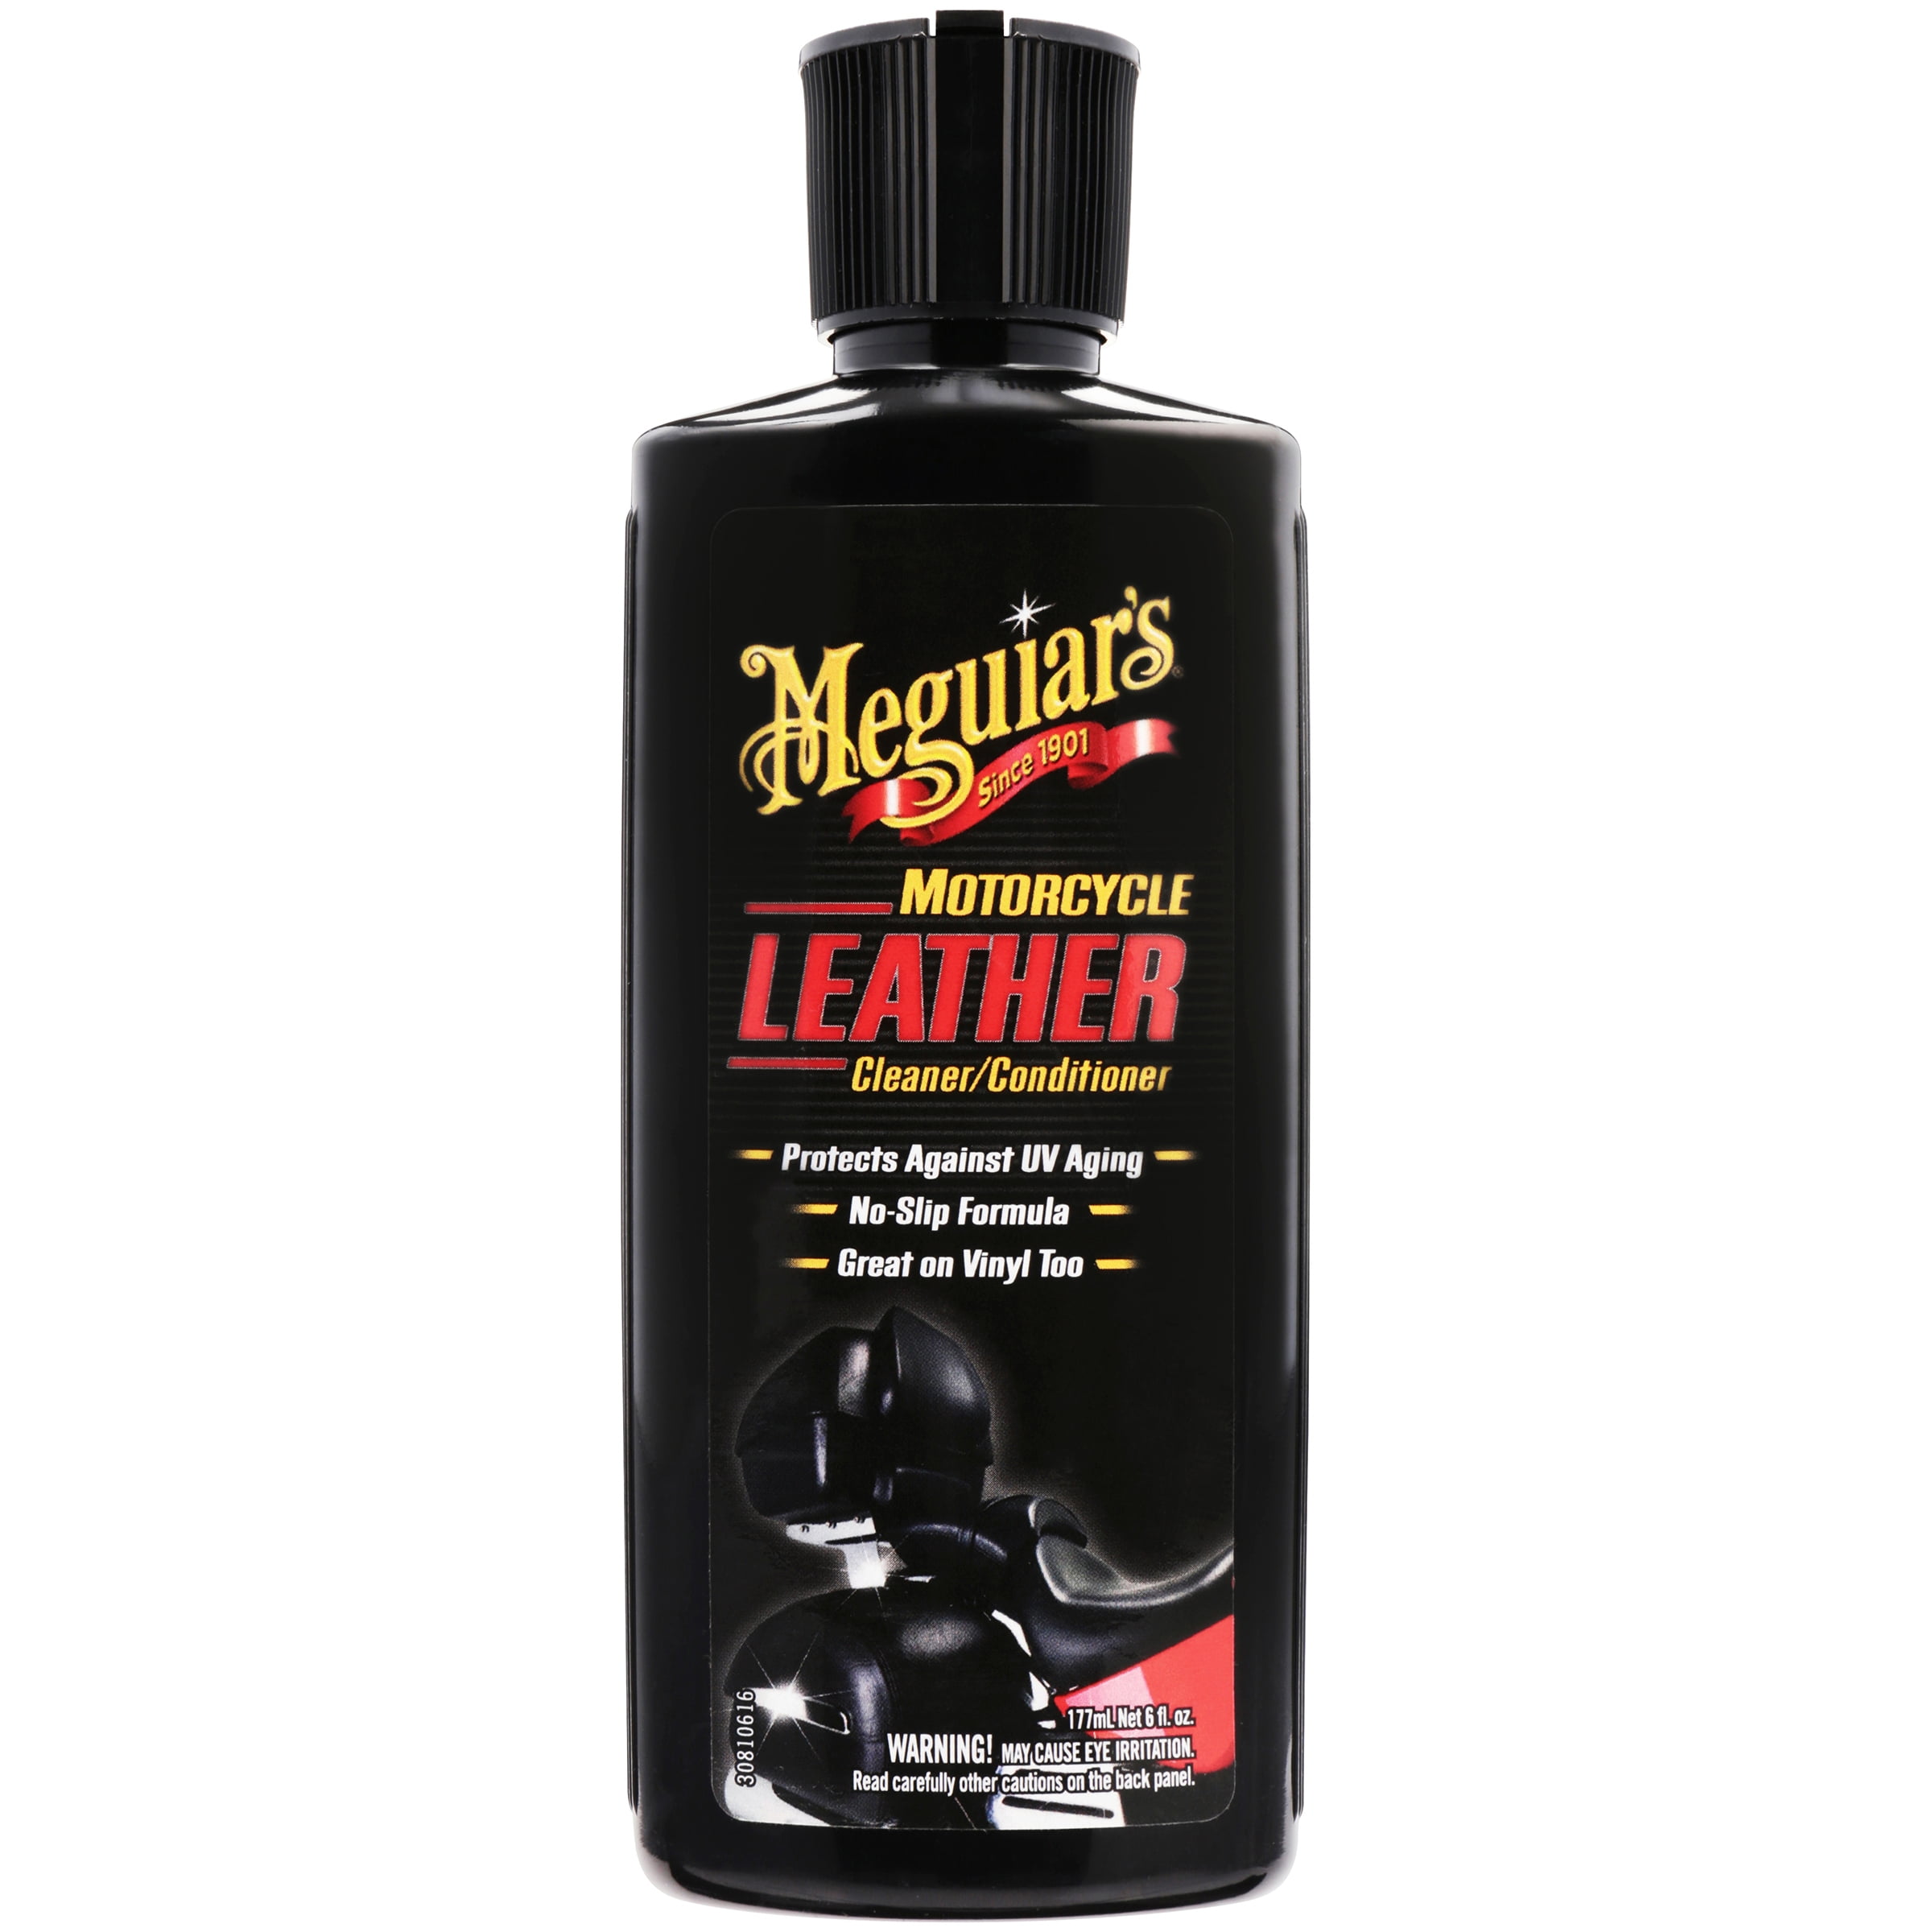 Meguiar's MC20306 Motorcycle Leather Cleaner/Conditioner, 6 Fluid Ounces